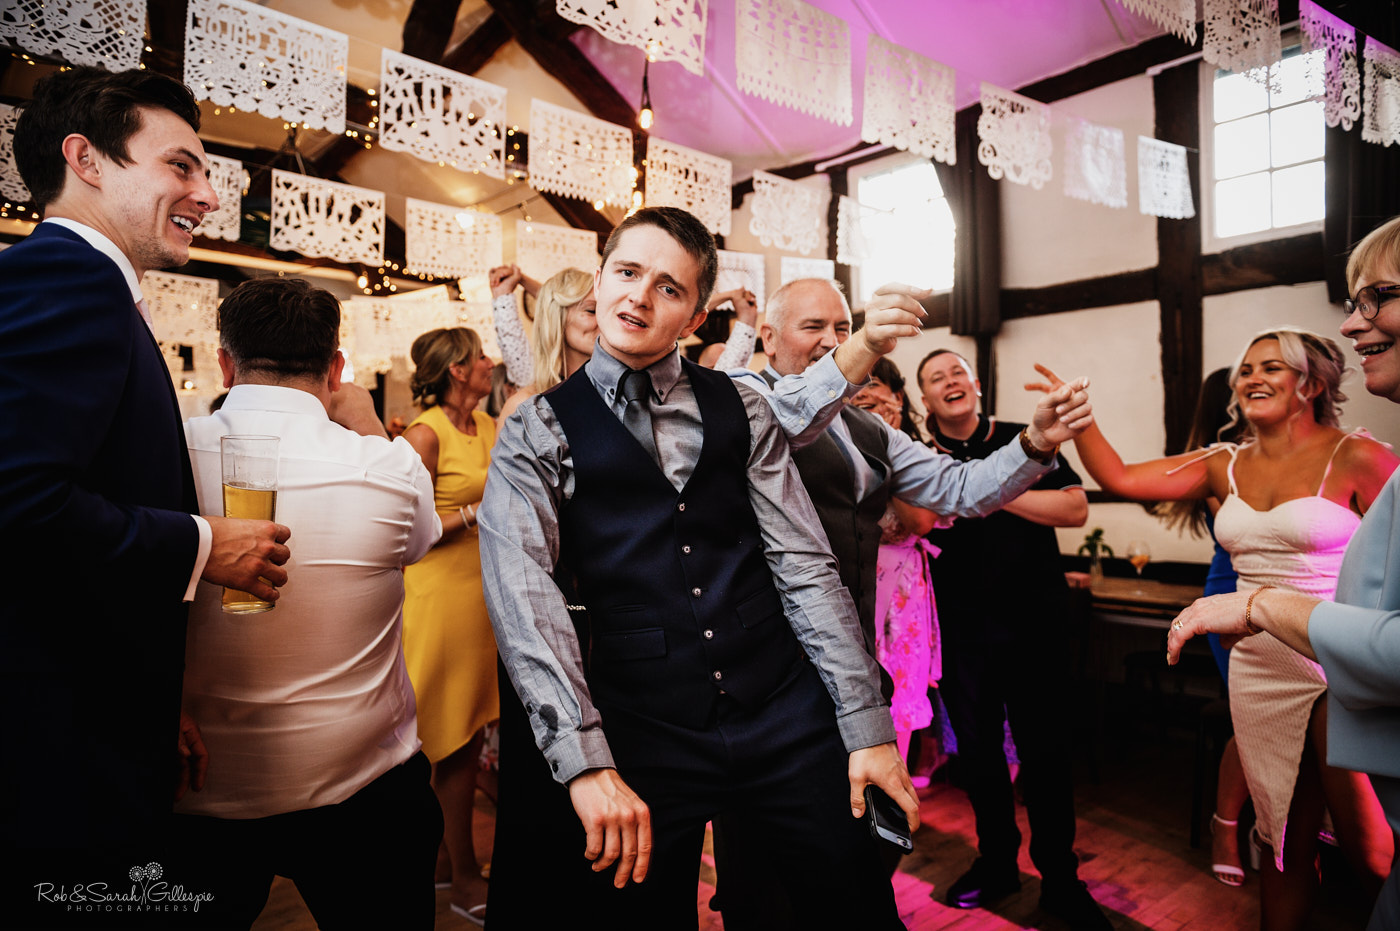 Guests dancing at village hall wedding reception